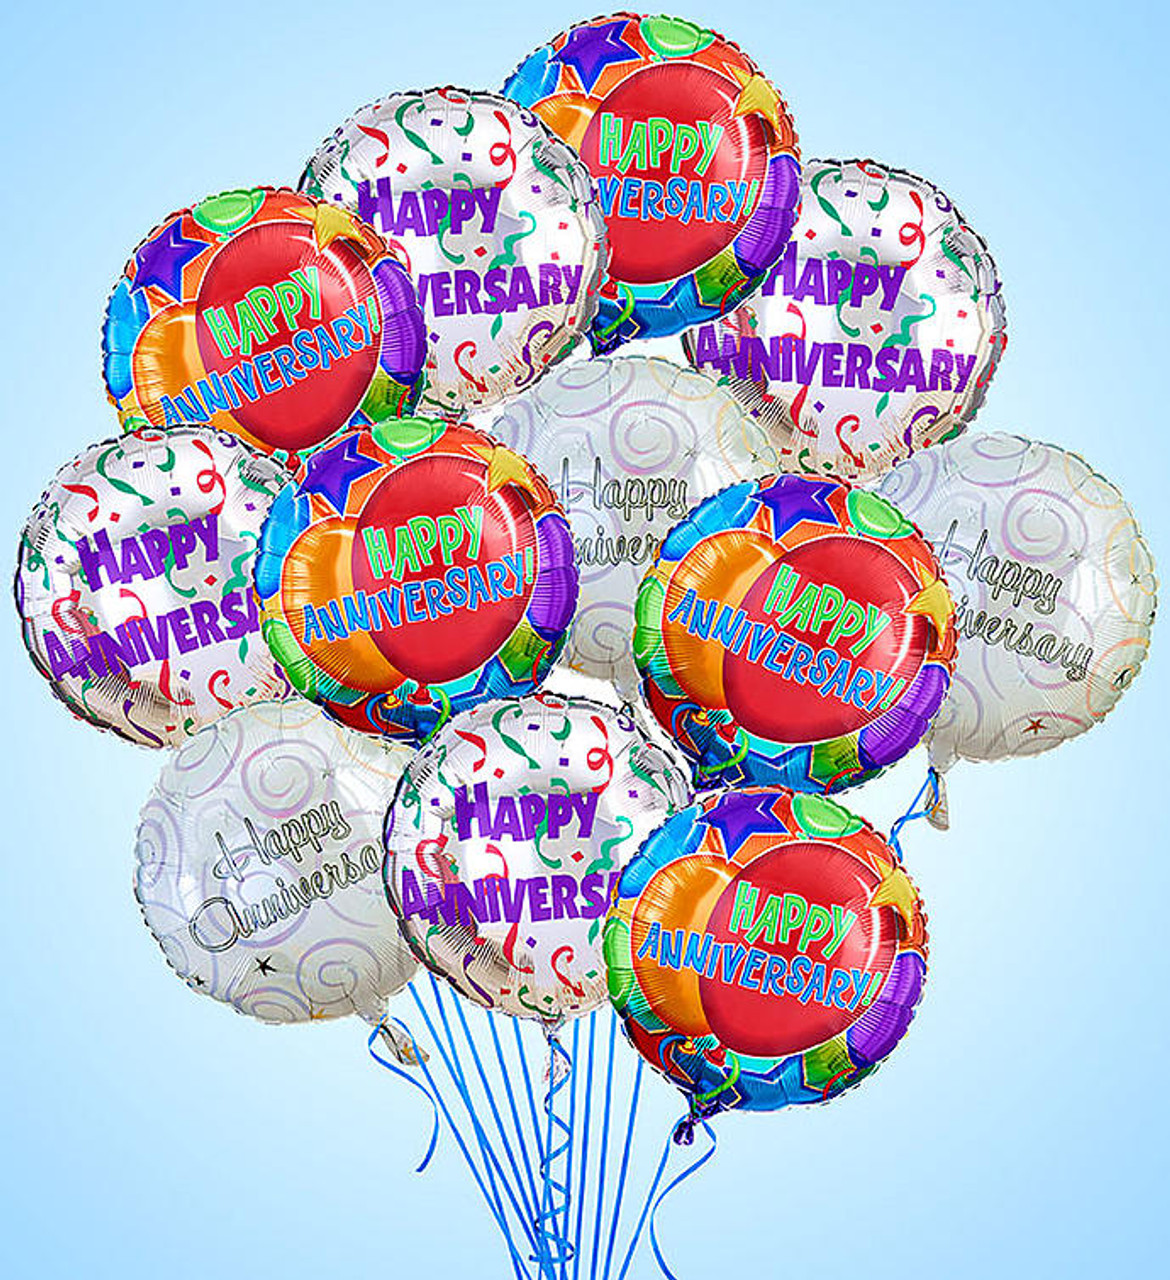 Happy Birthday Mylar Balloon Bouquet/ Best florist & balloons in  Burlington/order one today online